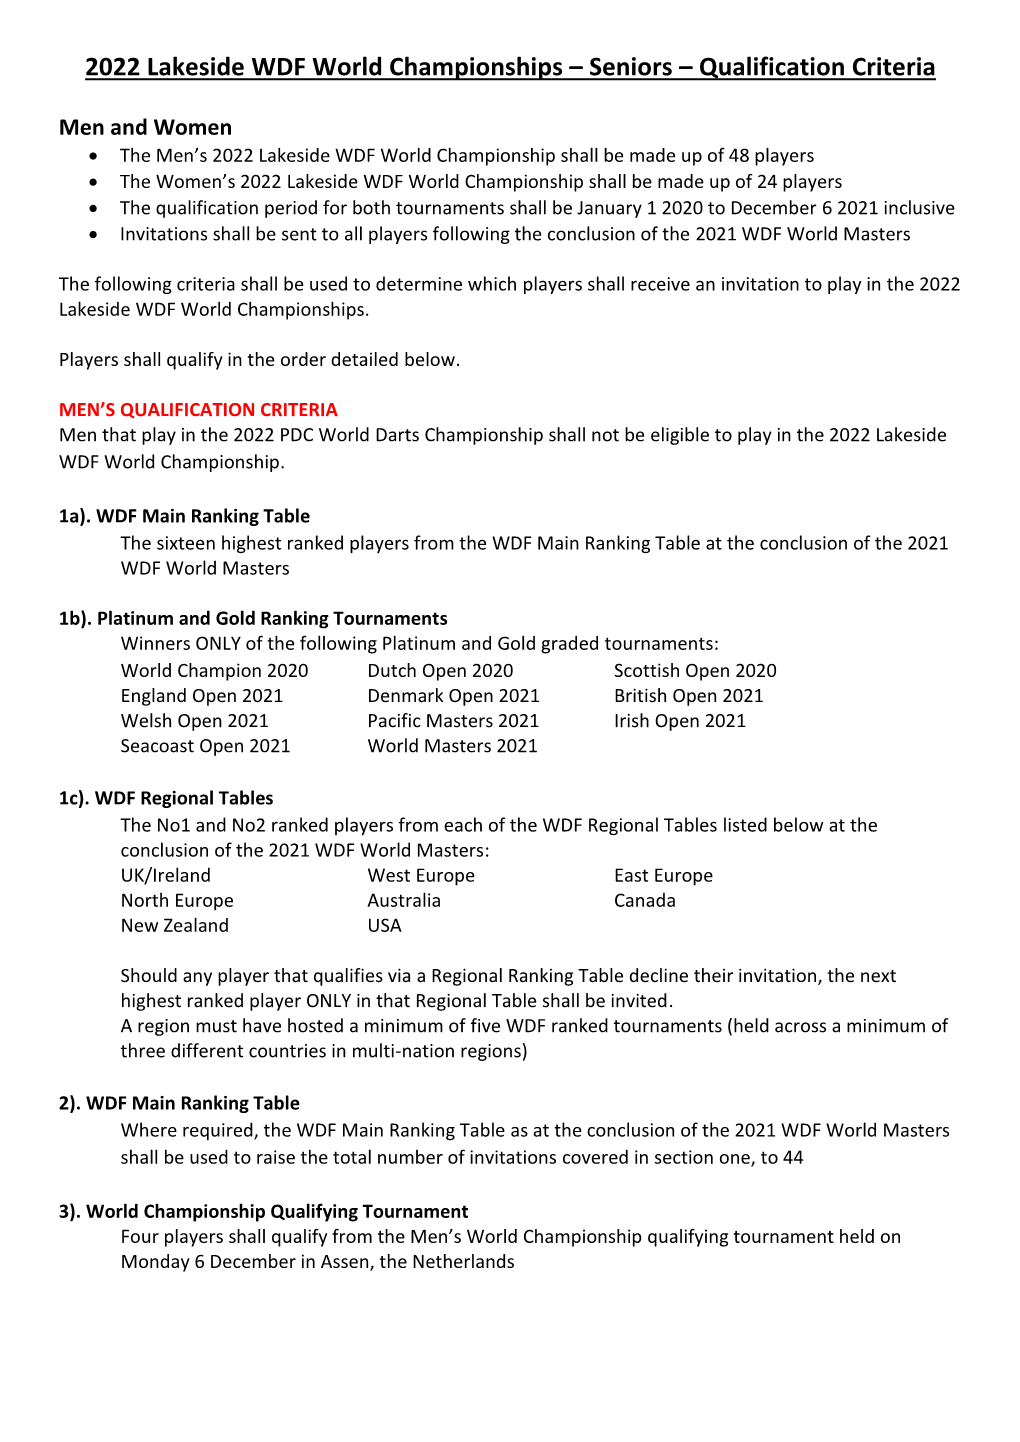 WDF World Championships Qualification Criteria